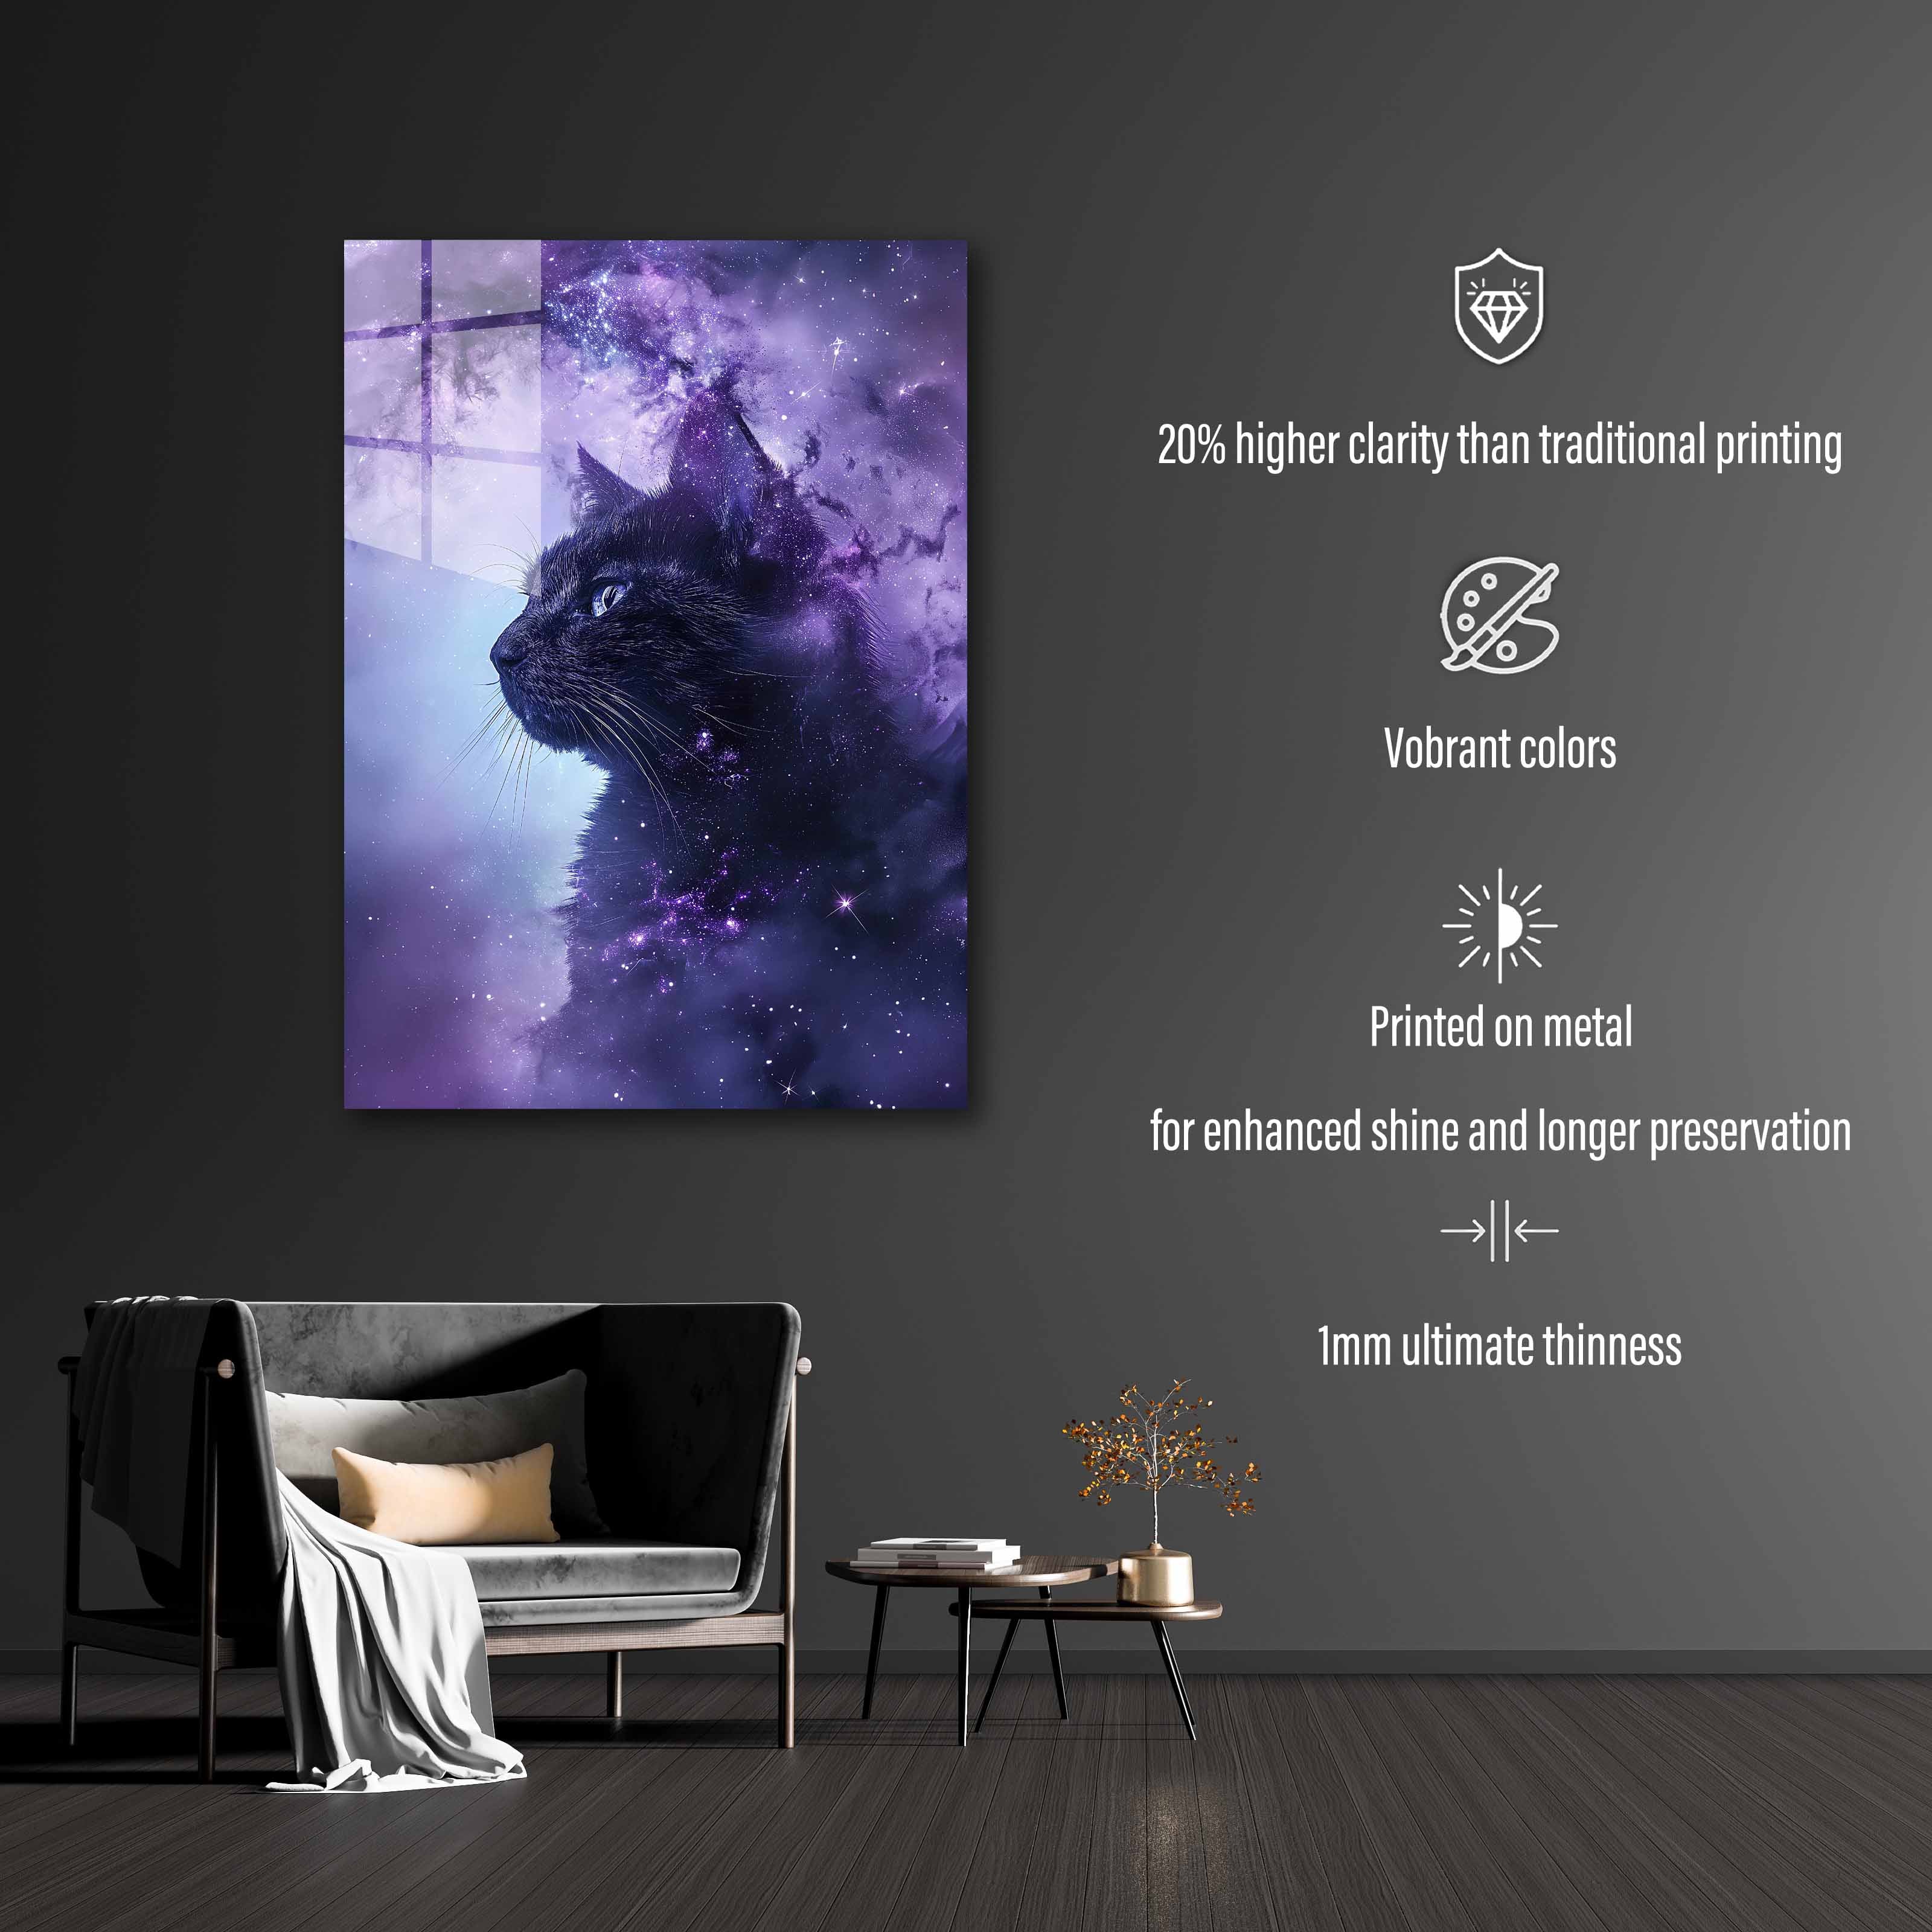 Cosmic Nebula Black Cat-designed by @HyperArt